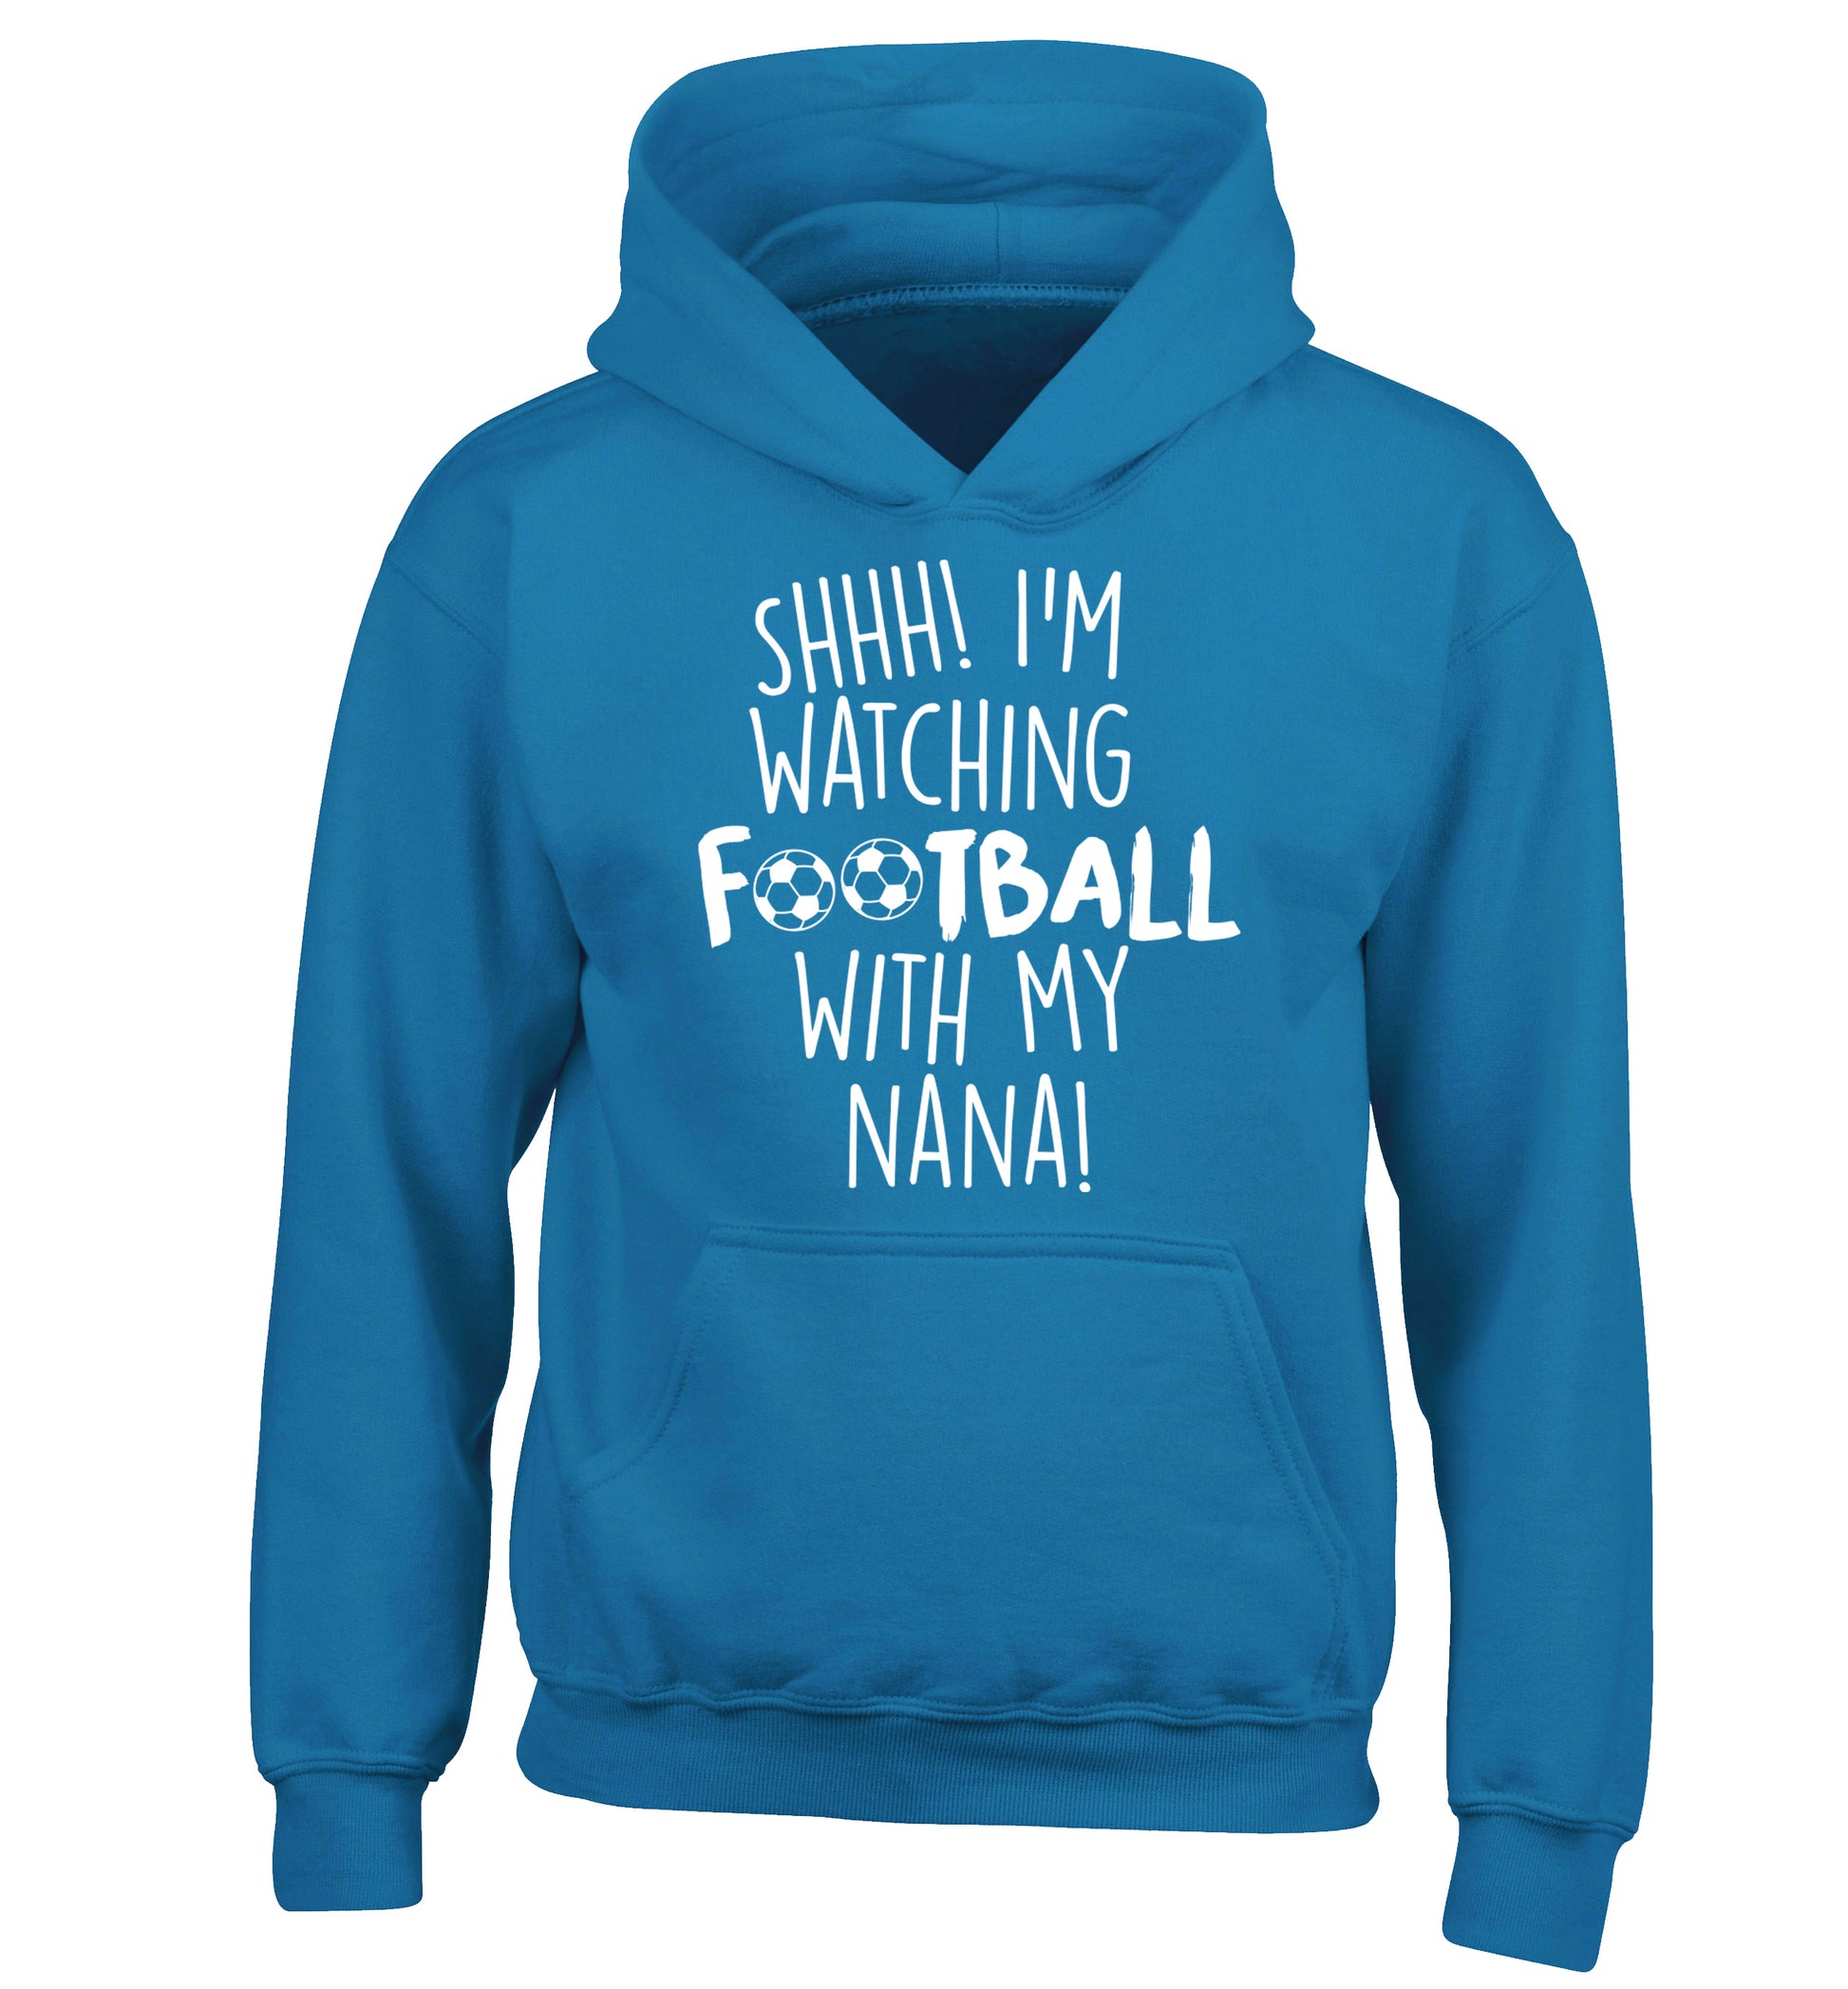 Shhh I'm watching football with my nana children's blue hoodie 12-14 Years